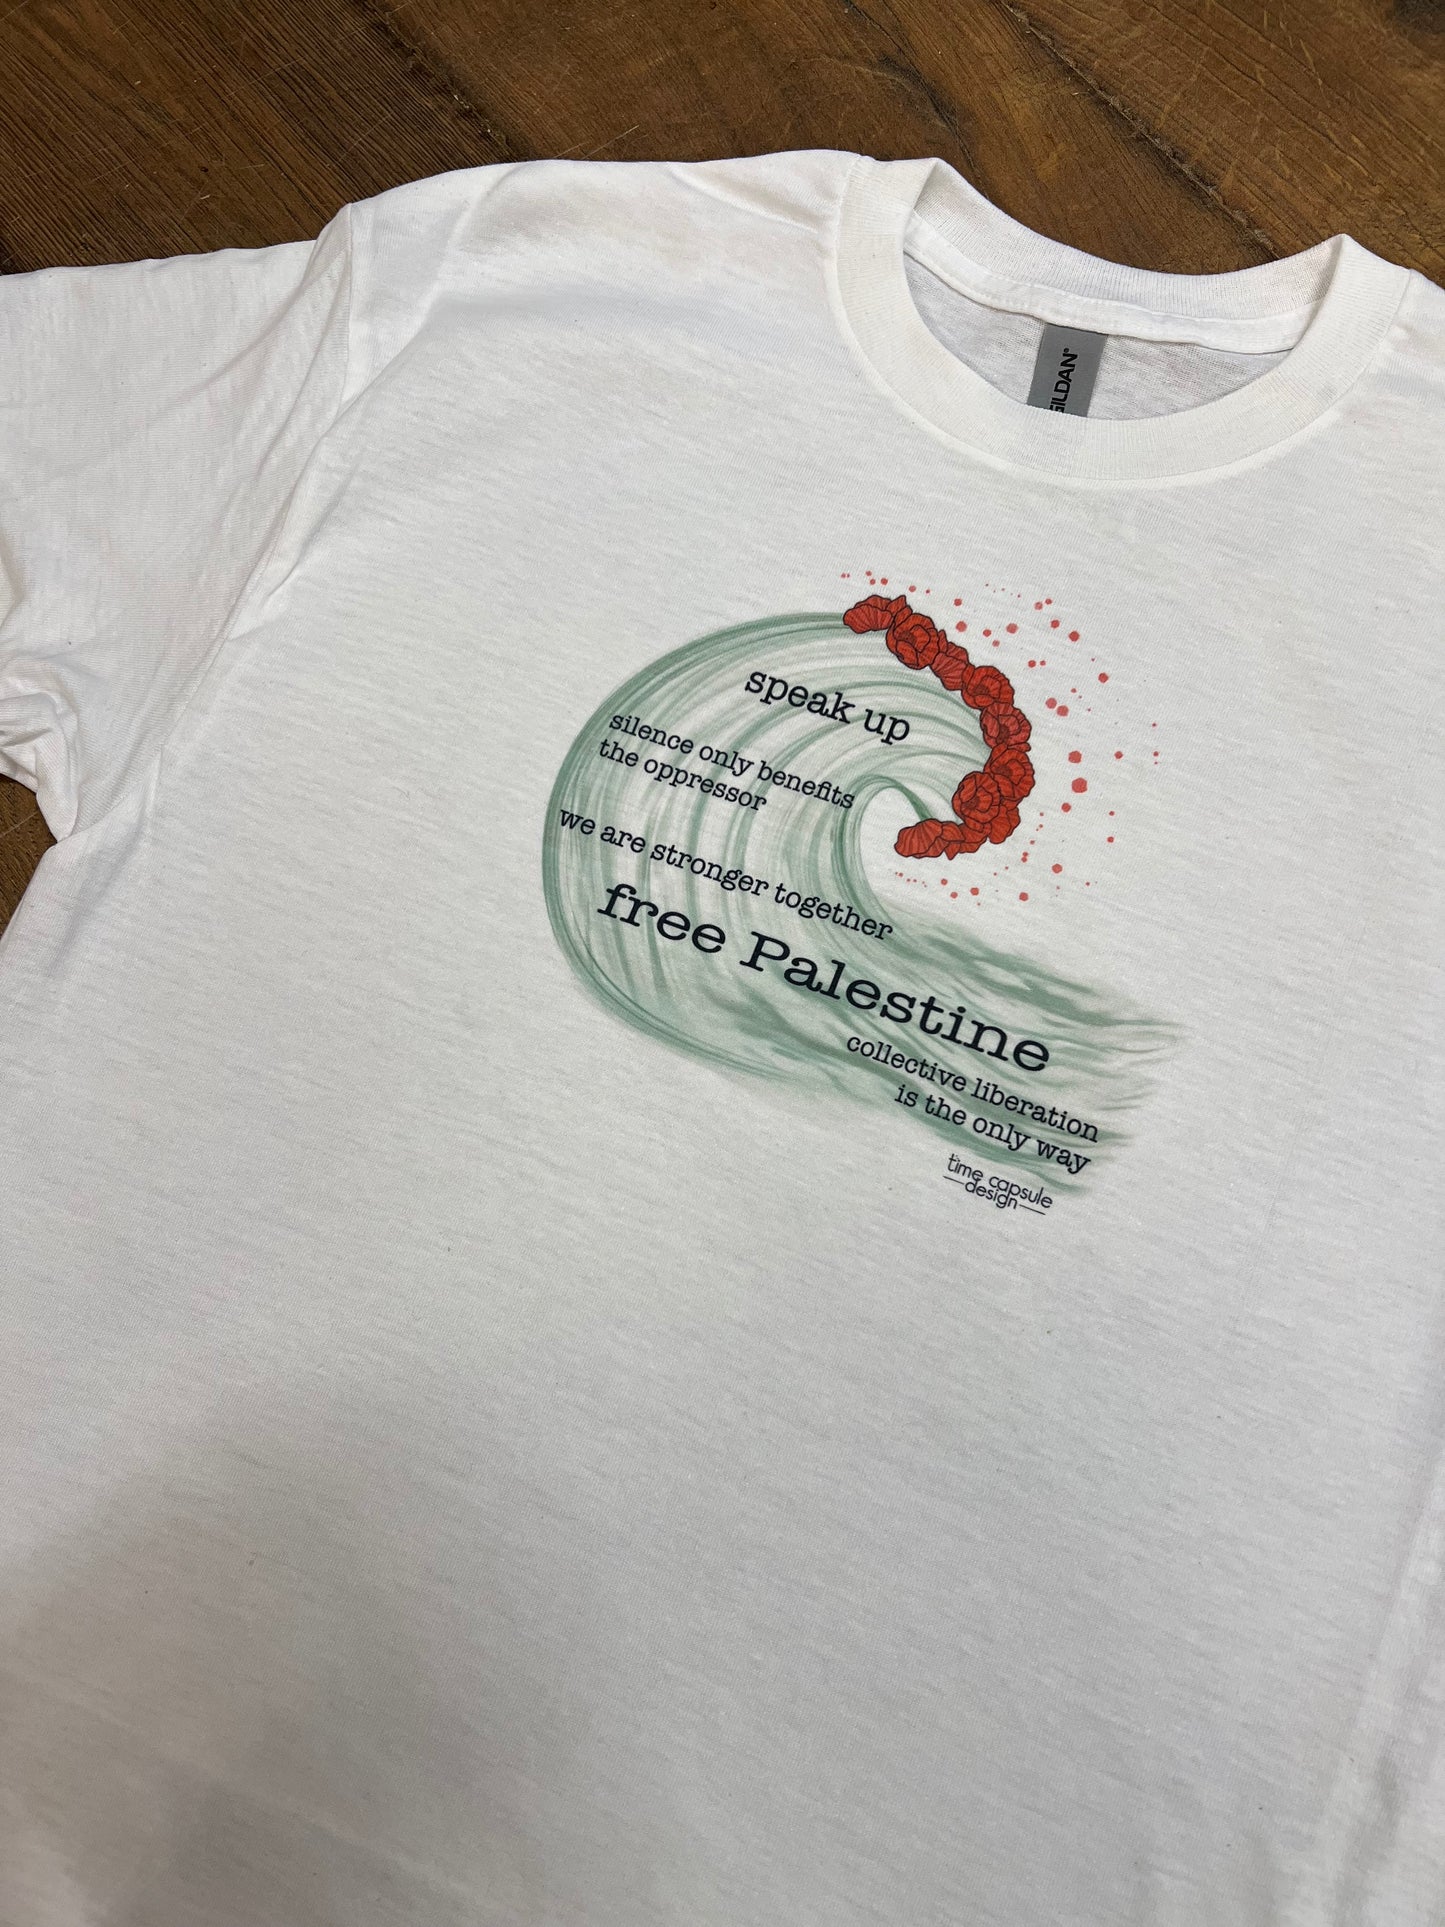 Free Palestine Wave  Shirt - Funding Operation Olive Branch - Zarifa Family